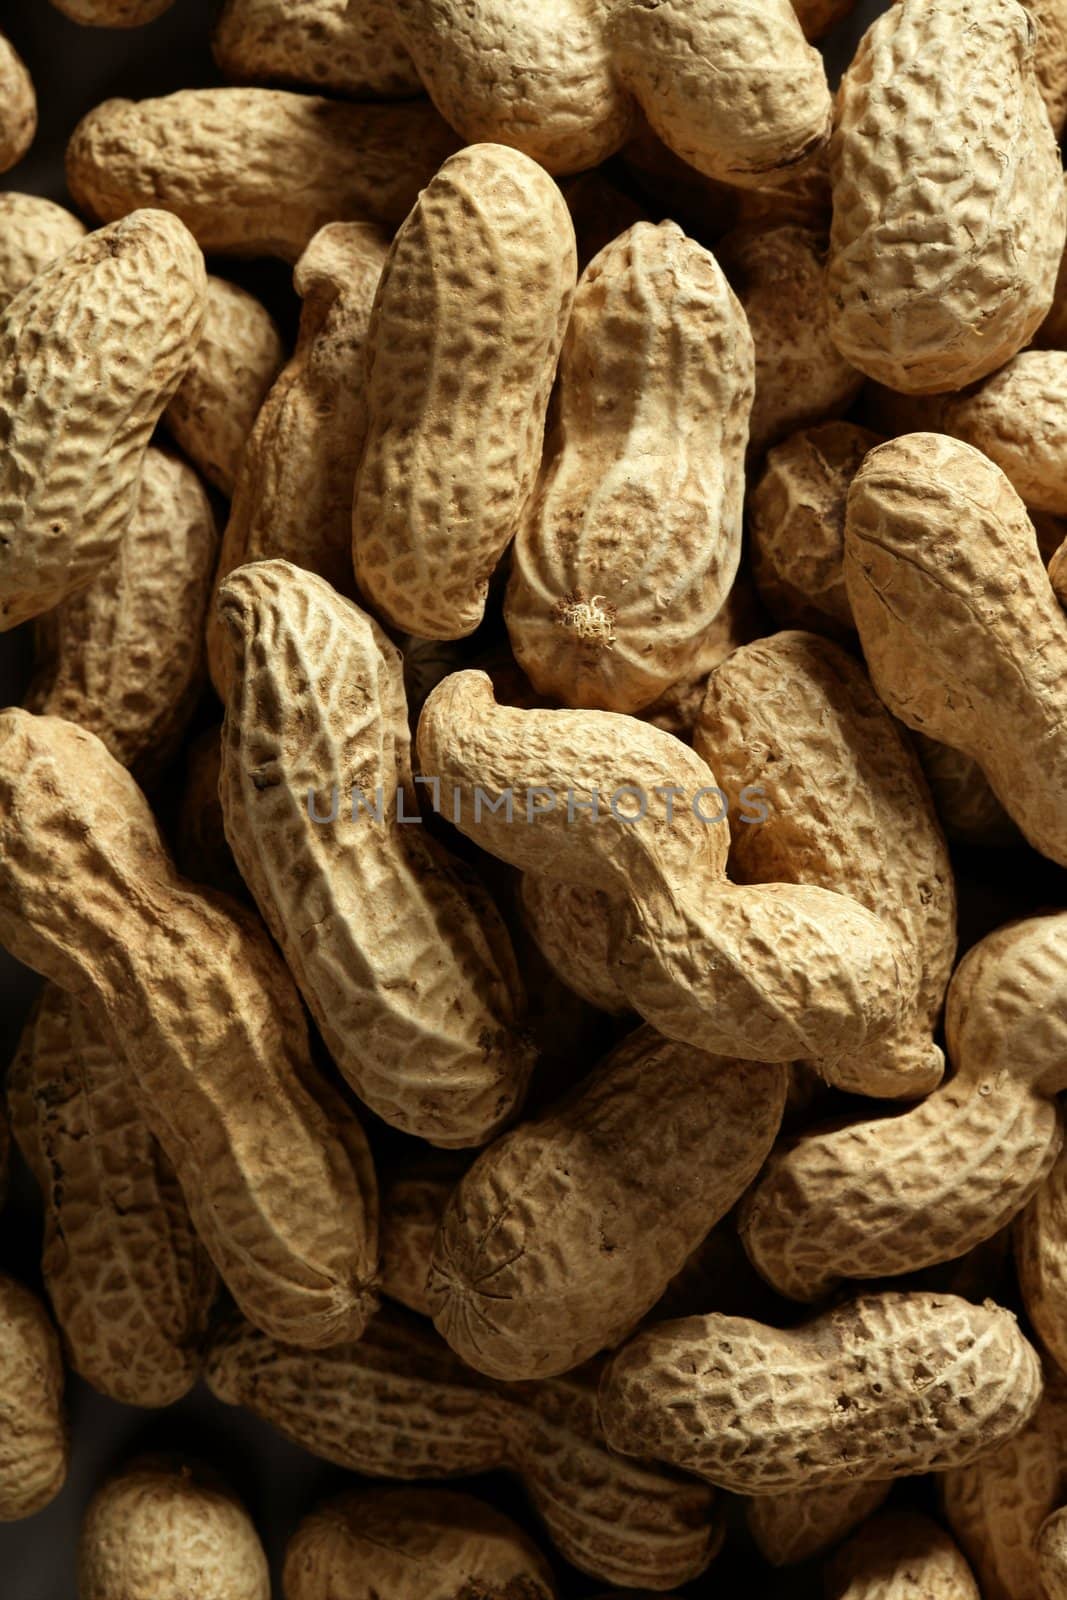 Peanuts macro over wood background by lunamarina